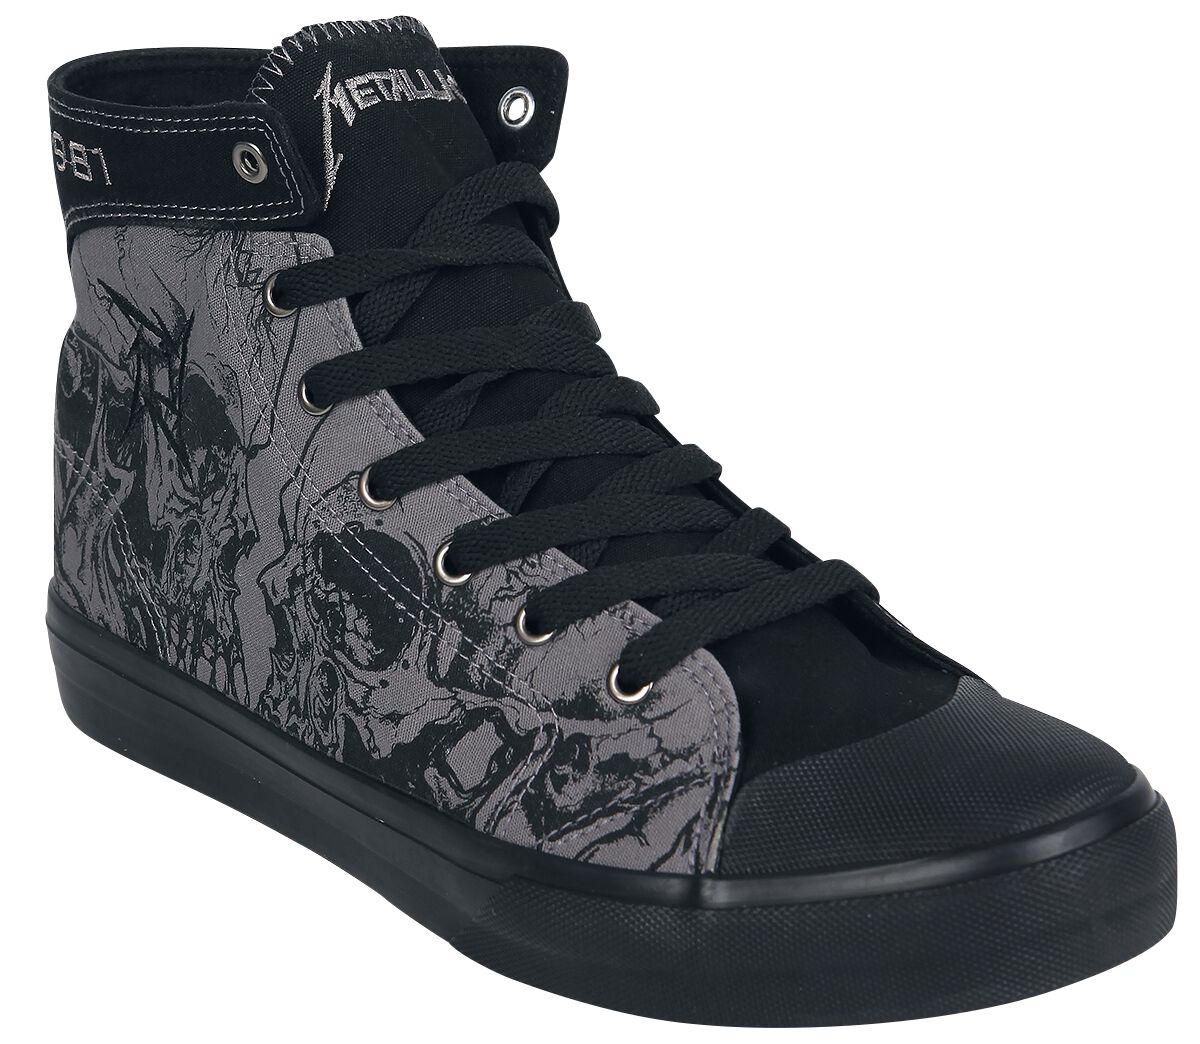 Metallica Sneaker high - EMP Signature Collection - EU37 bis EU47 - Größe EU41 - grau/schwarz  - EMP exklusives Merchandise!